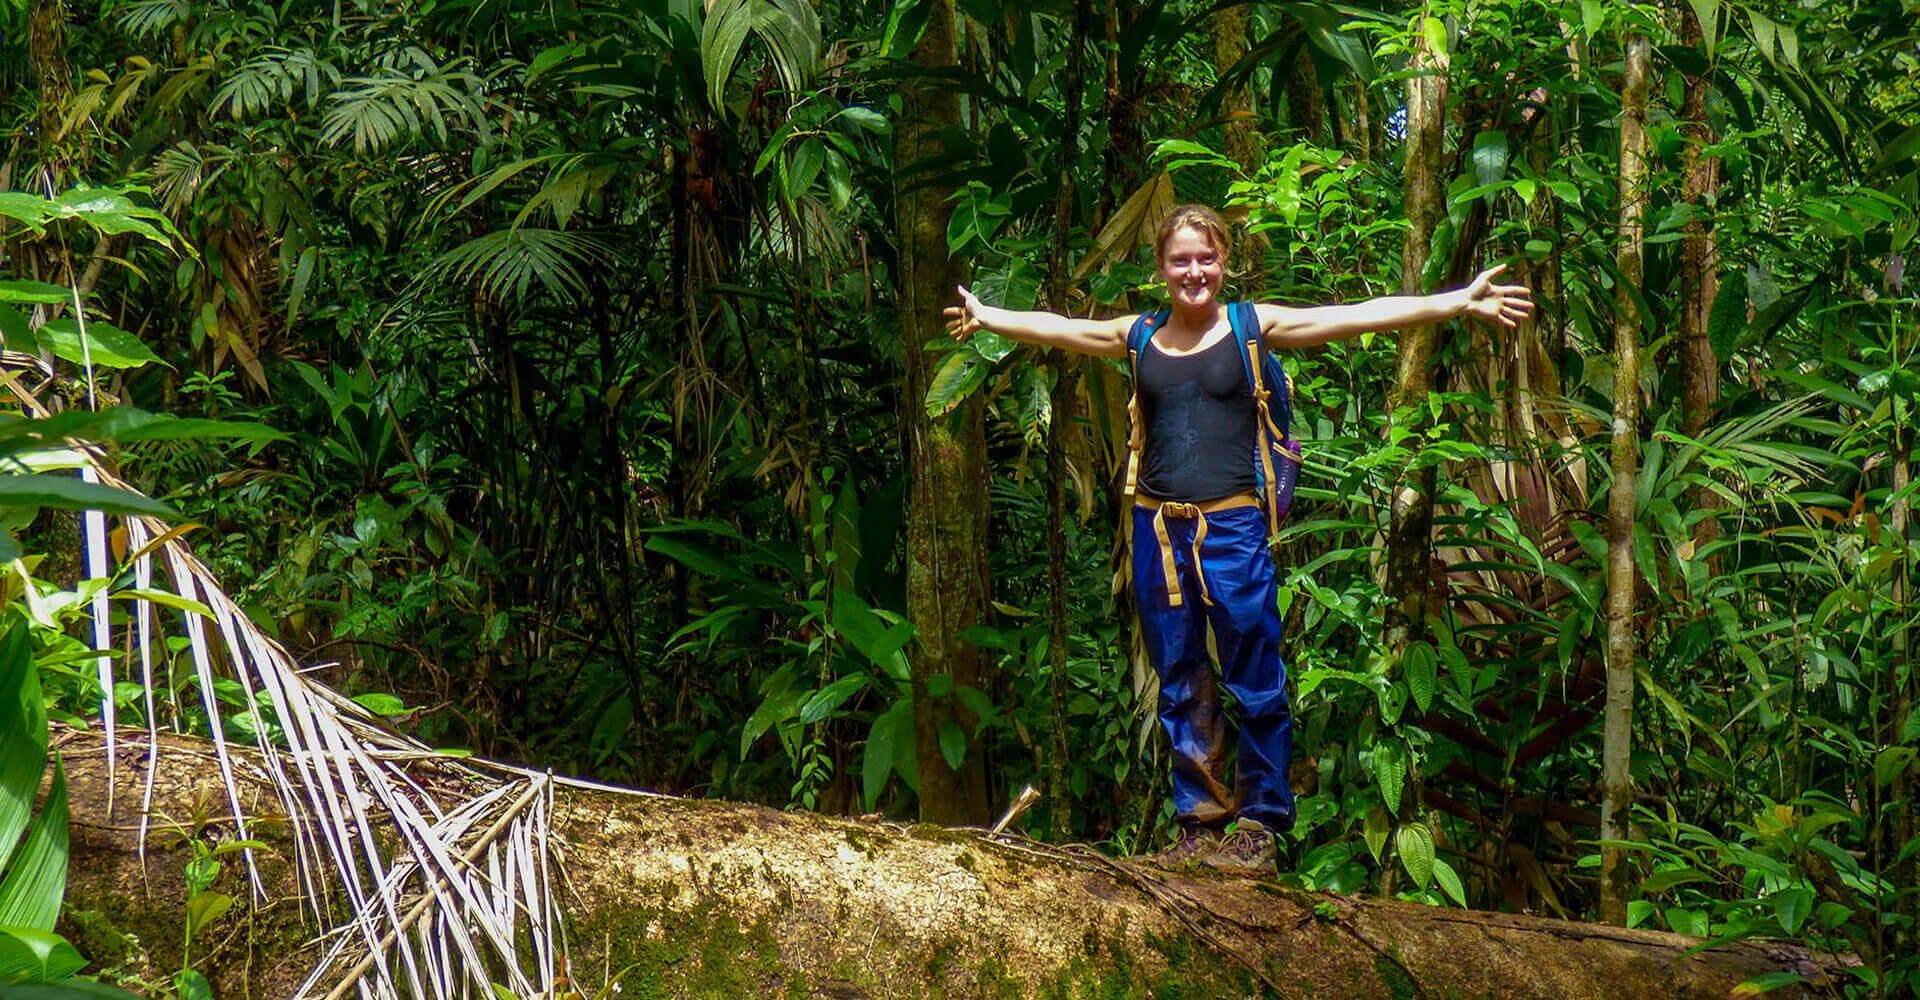 The tourist feel the freedom in beautiful nature in the Makanadawa Forest in Sri Lanka